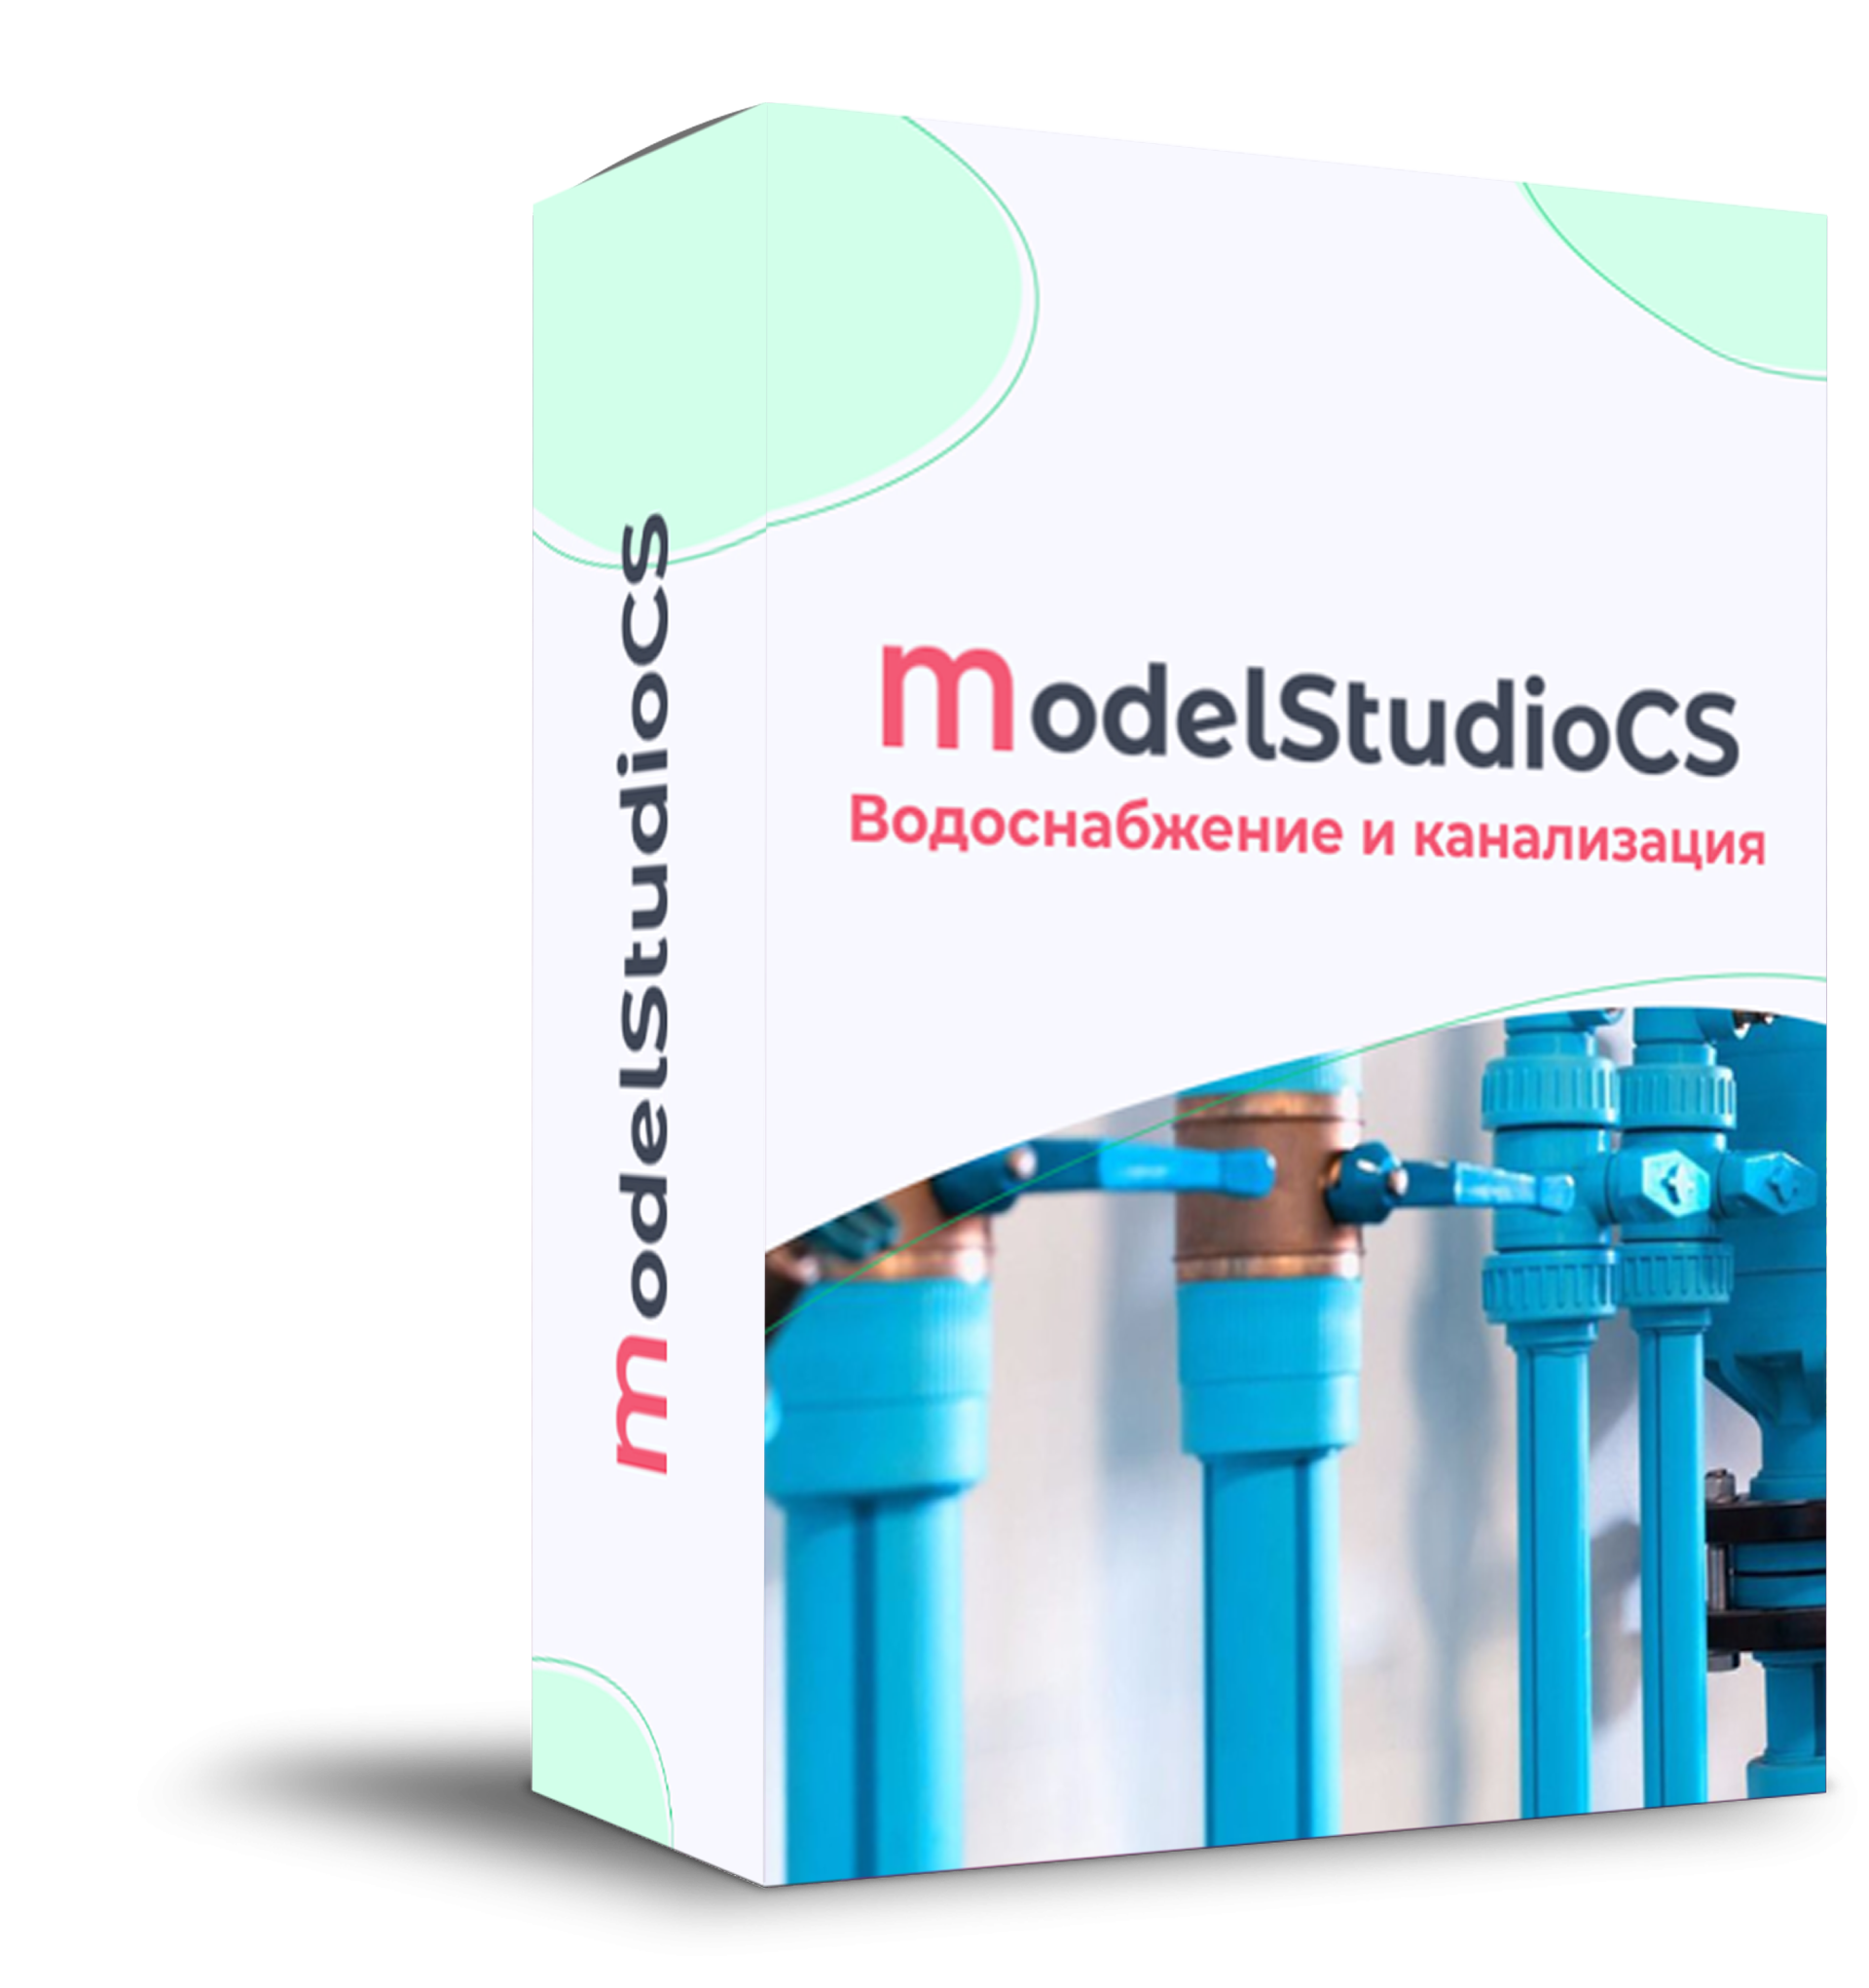 Model Studio CS ВК